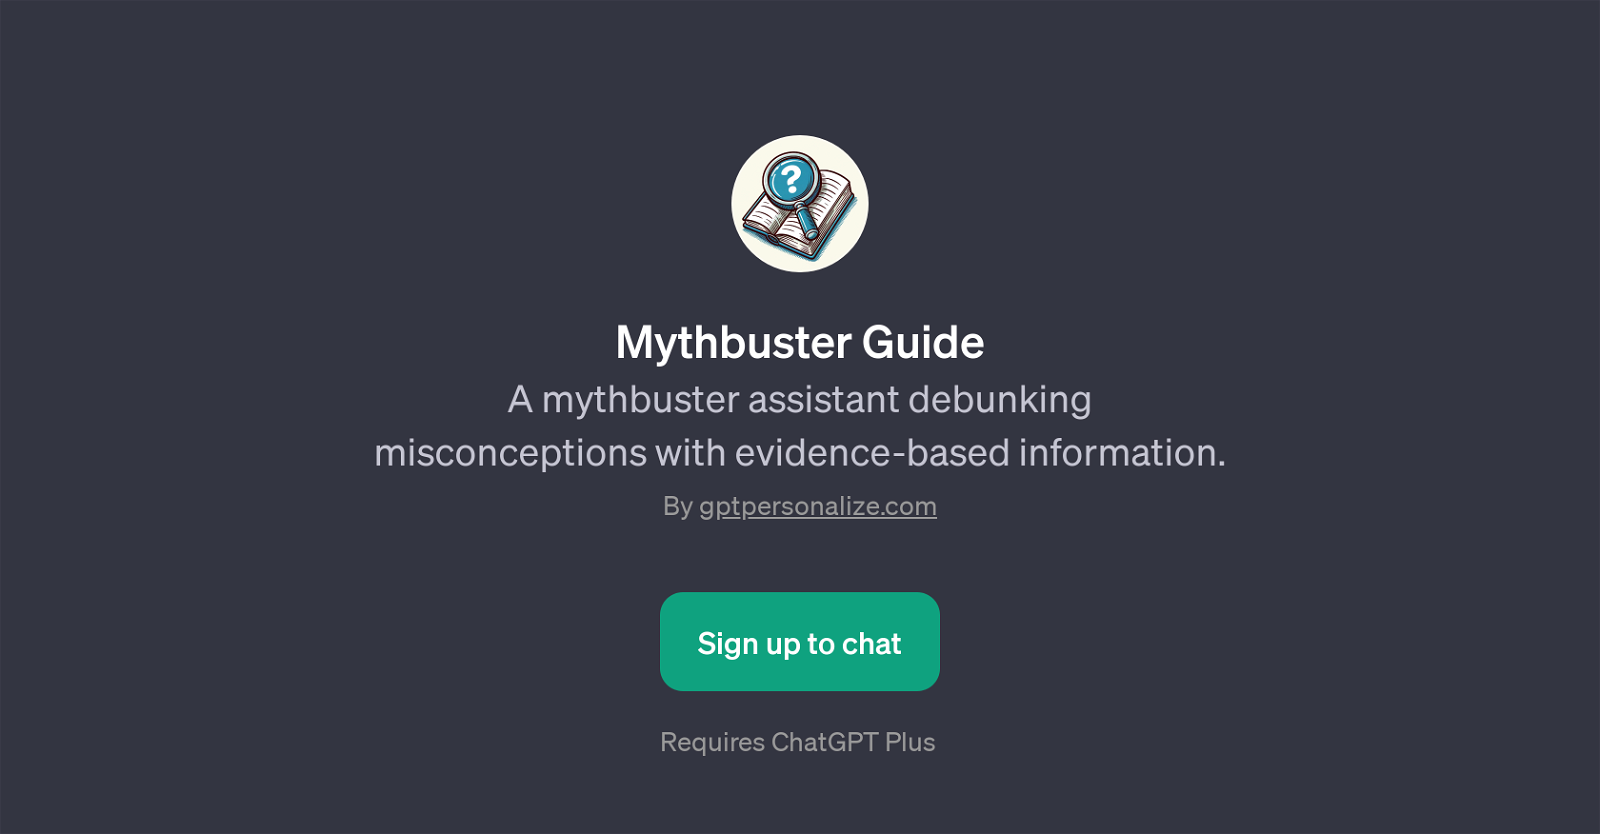 Mythbuster Guide website